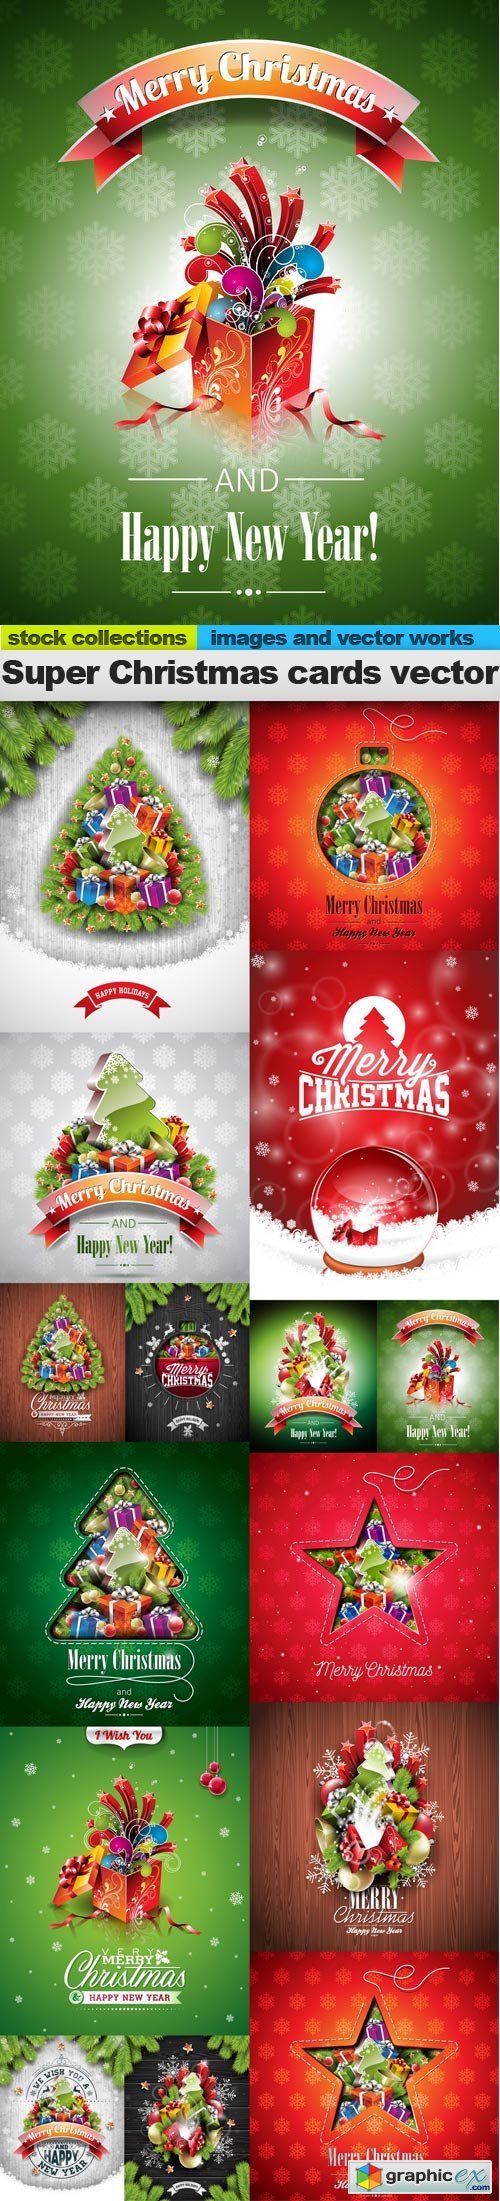 Super Christmas cards vector, 15 x EPS